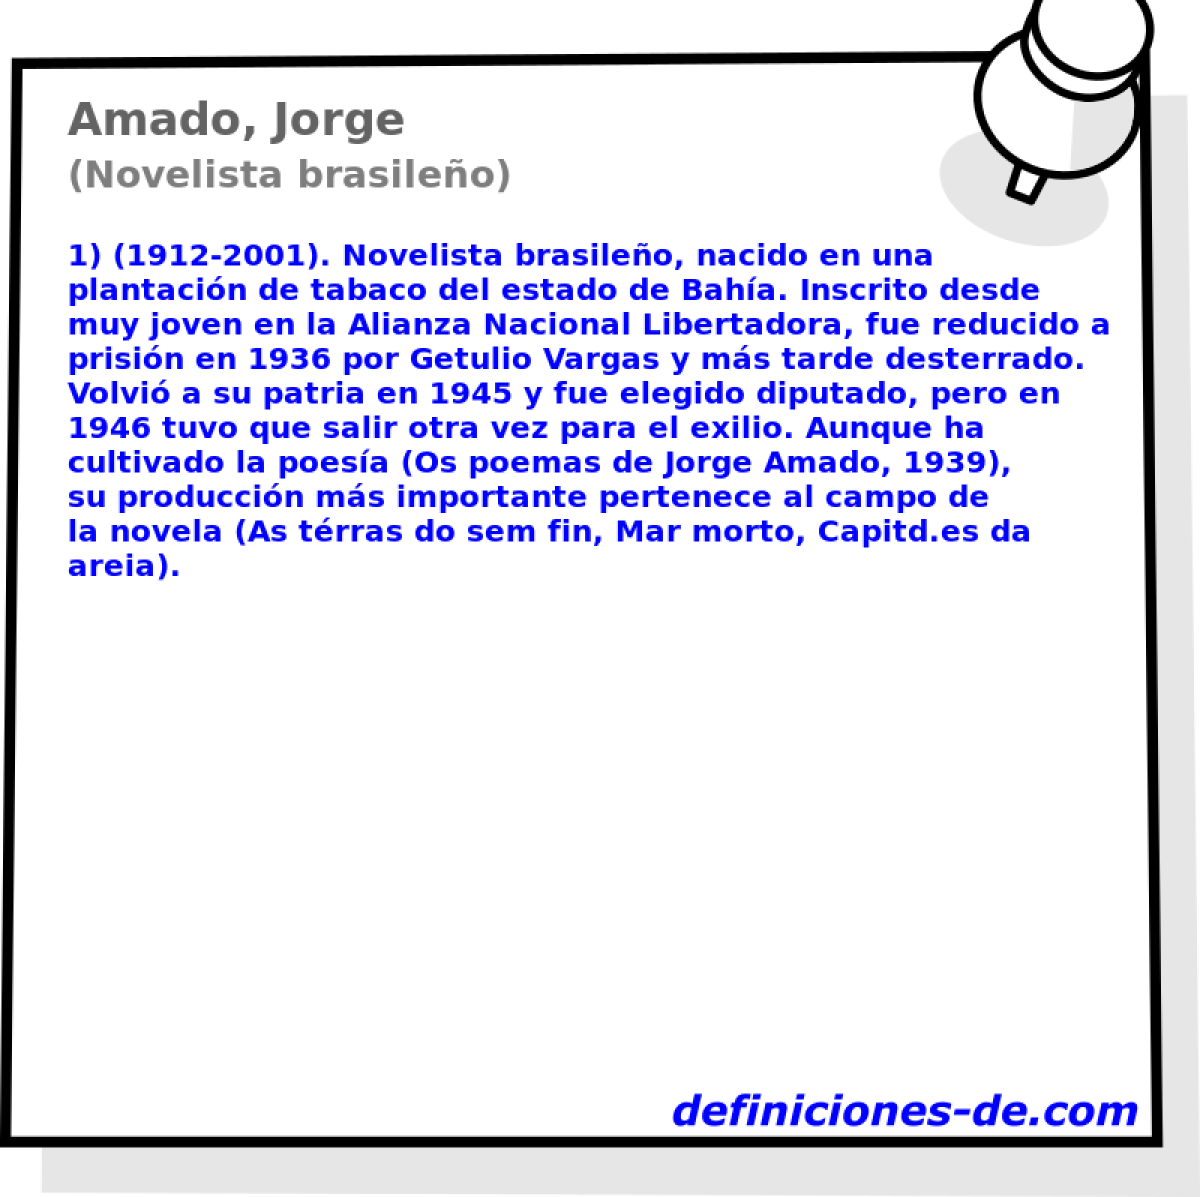 Amado, Jorge (Novelista brasileo)